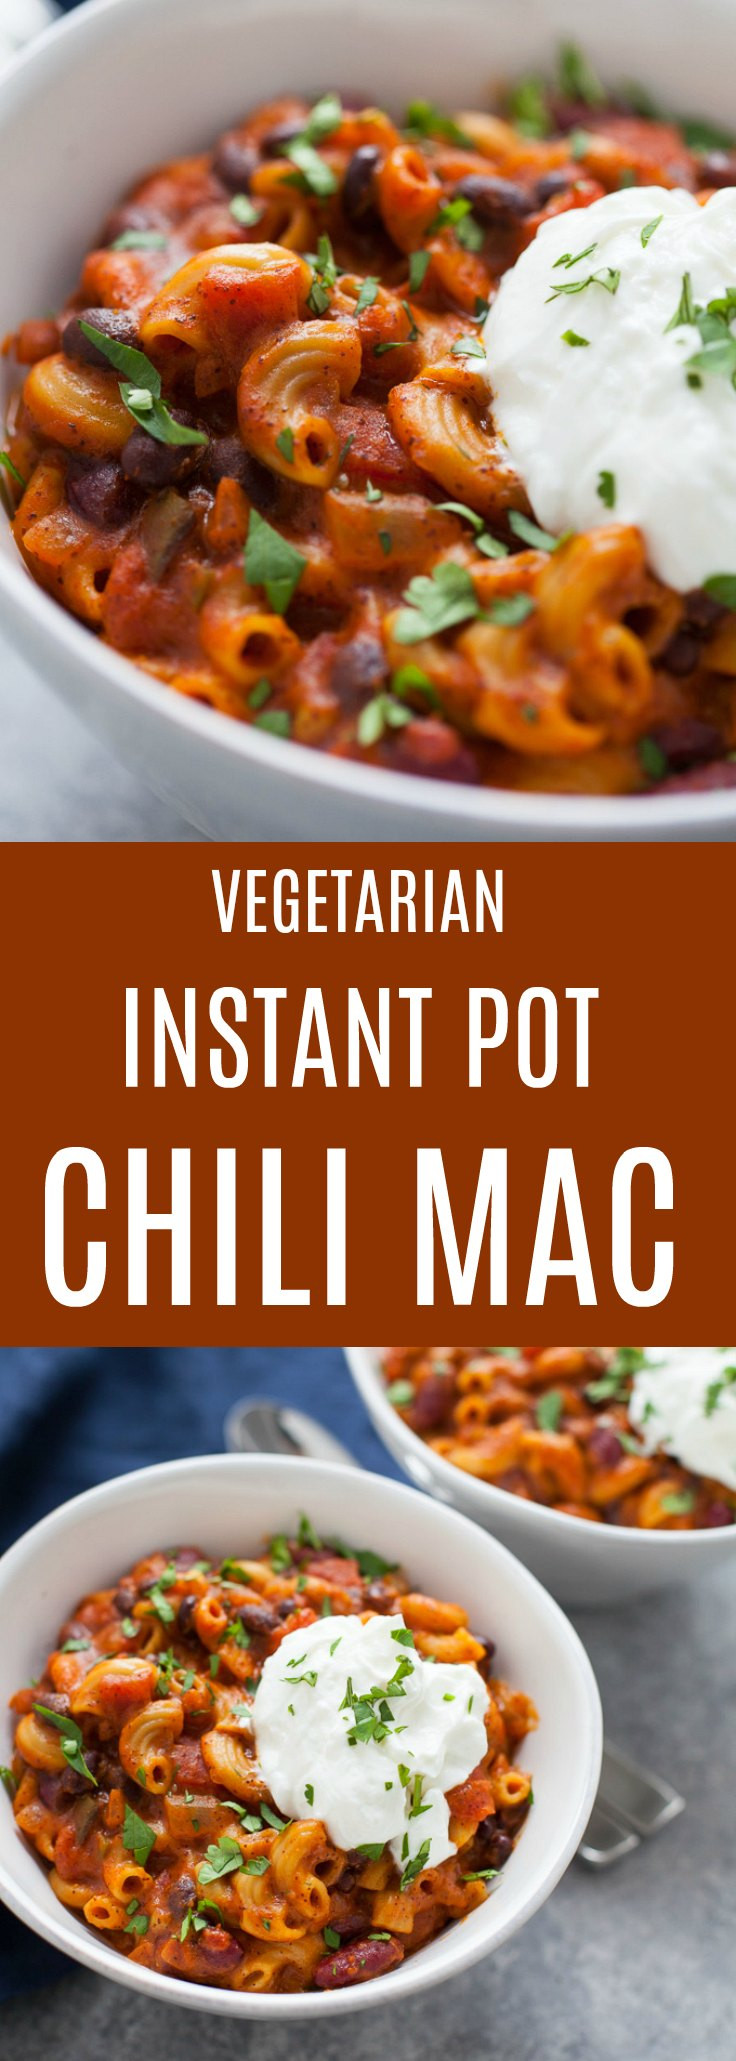 Easy Instant Pot Recipes Vegetarian
 Kara Lydon